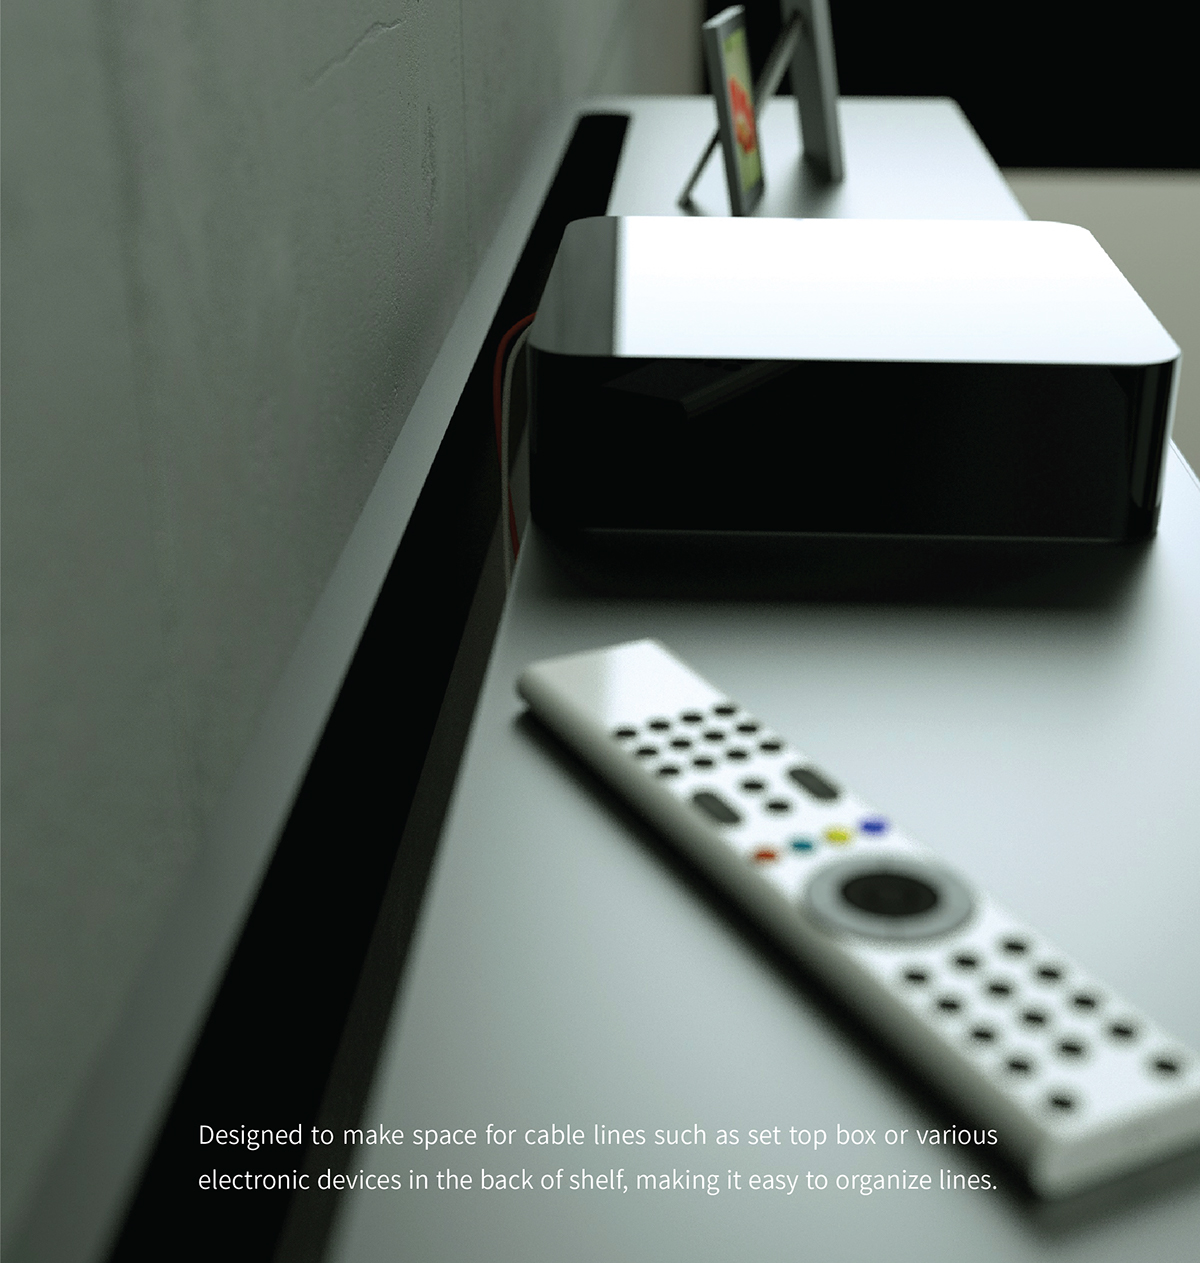 tv product productdesign design industrial furniture rack reinterpret